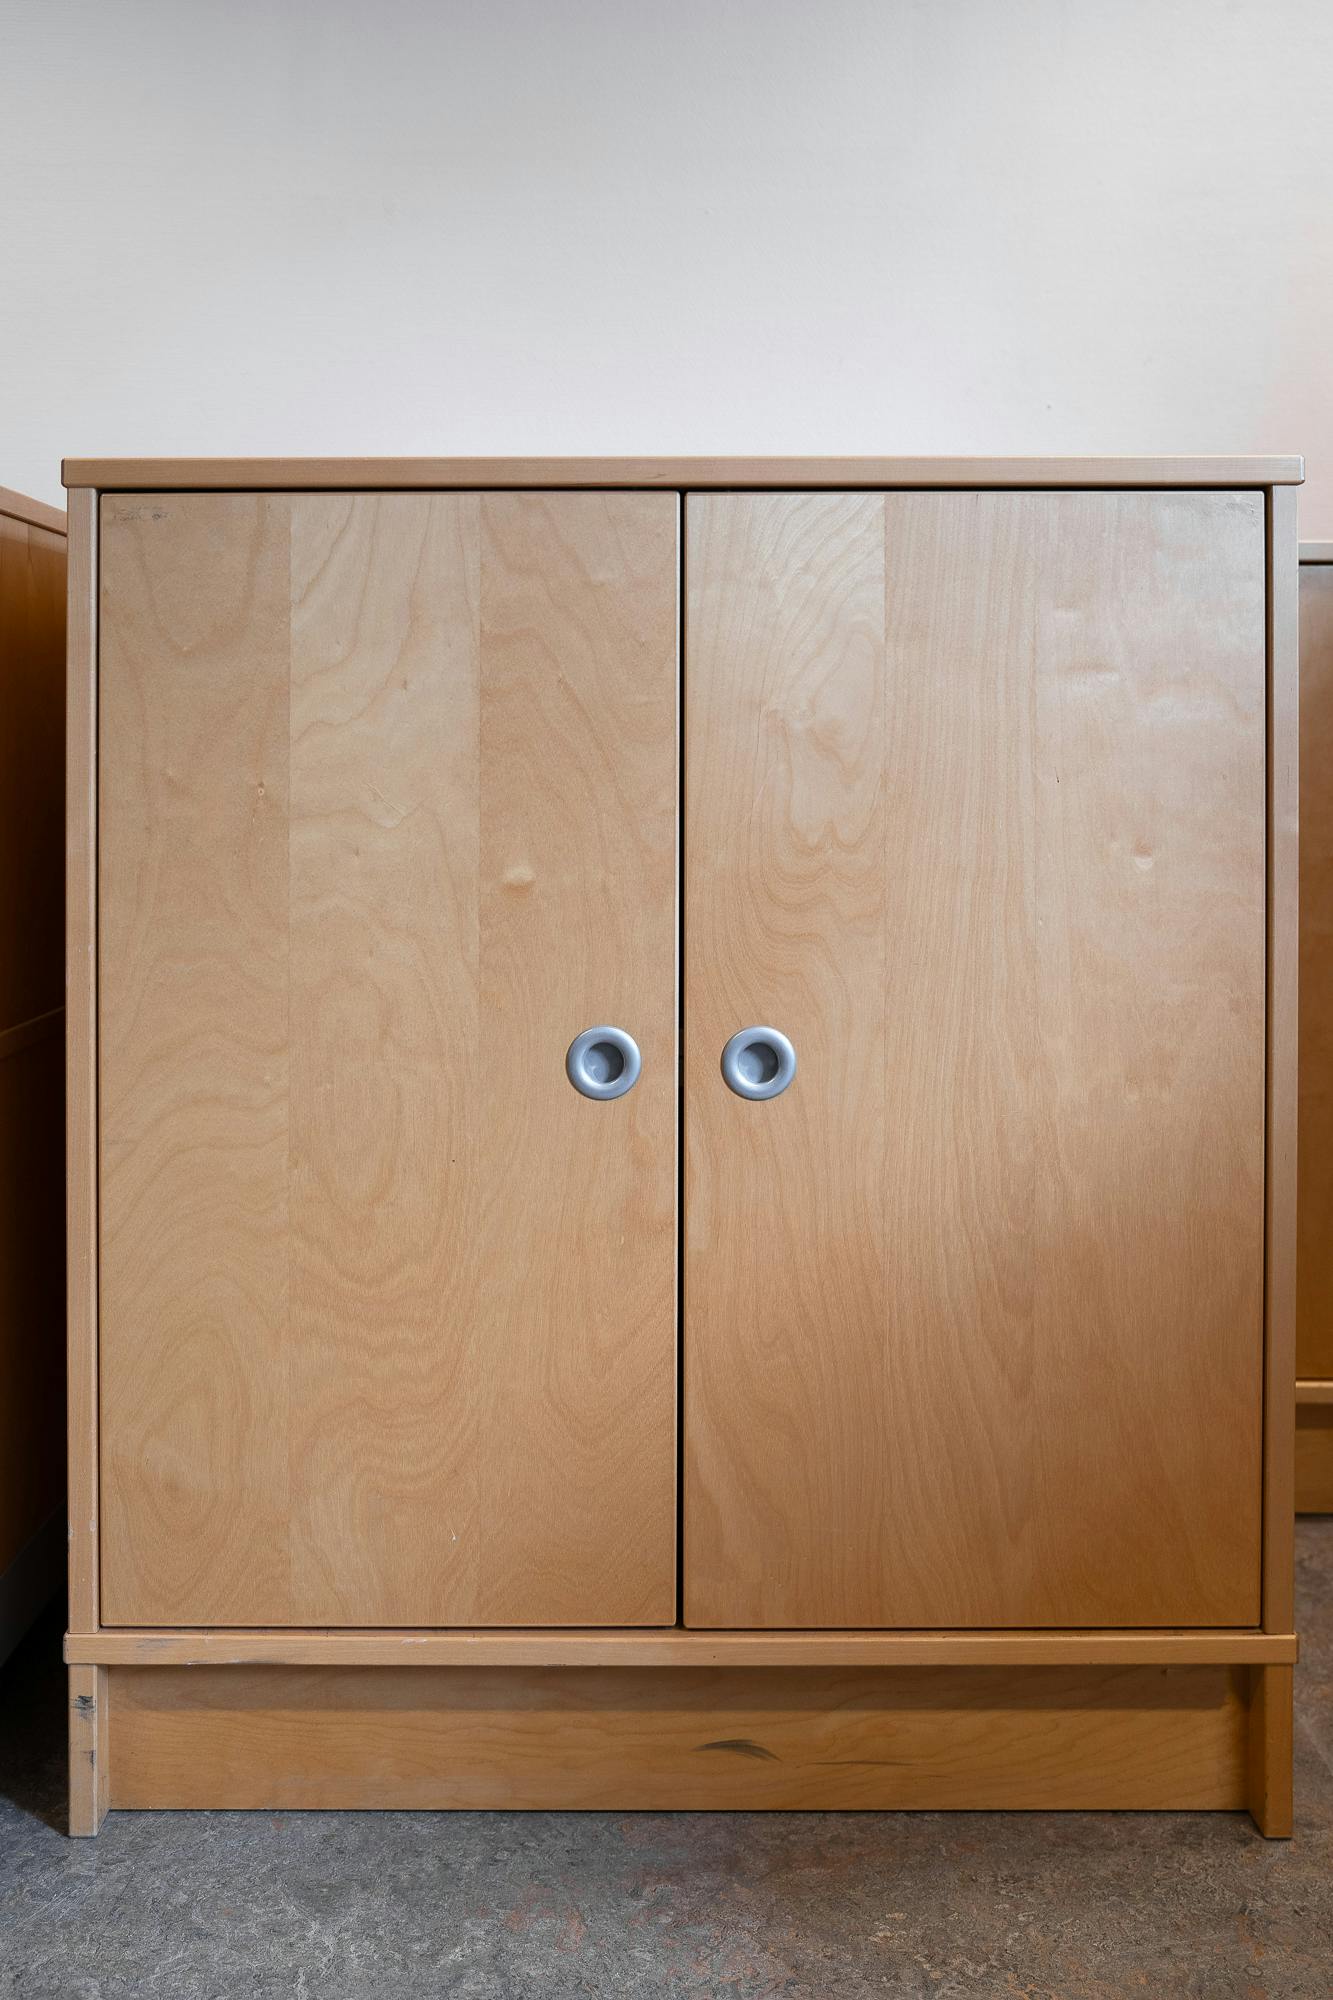 ikea wooden storage cabinet - Second hand quality "Storage" - Relieve Furniture